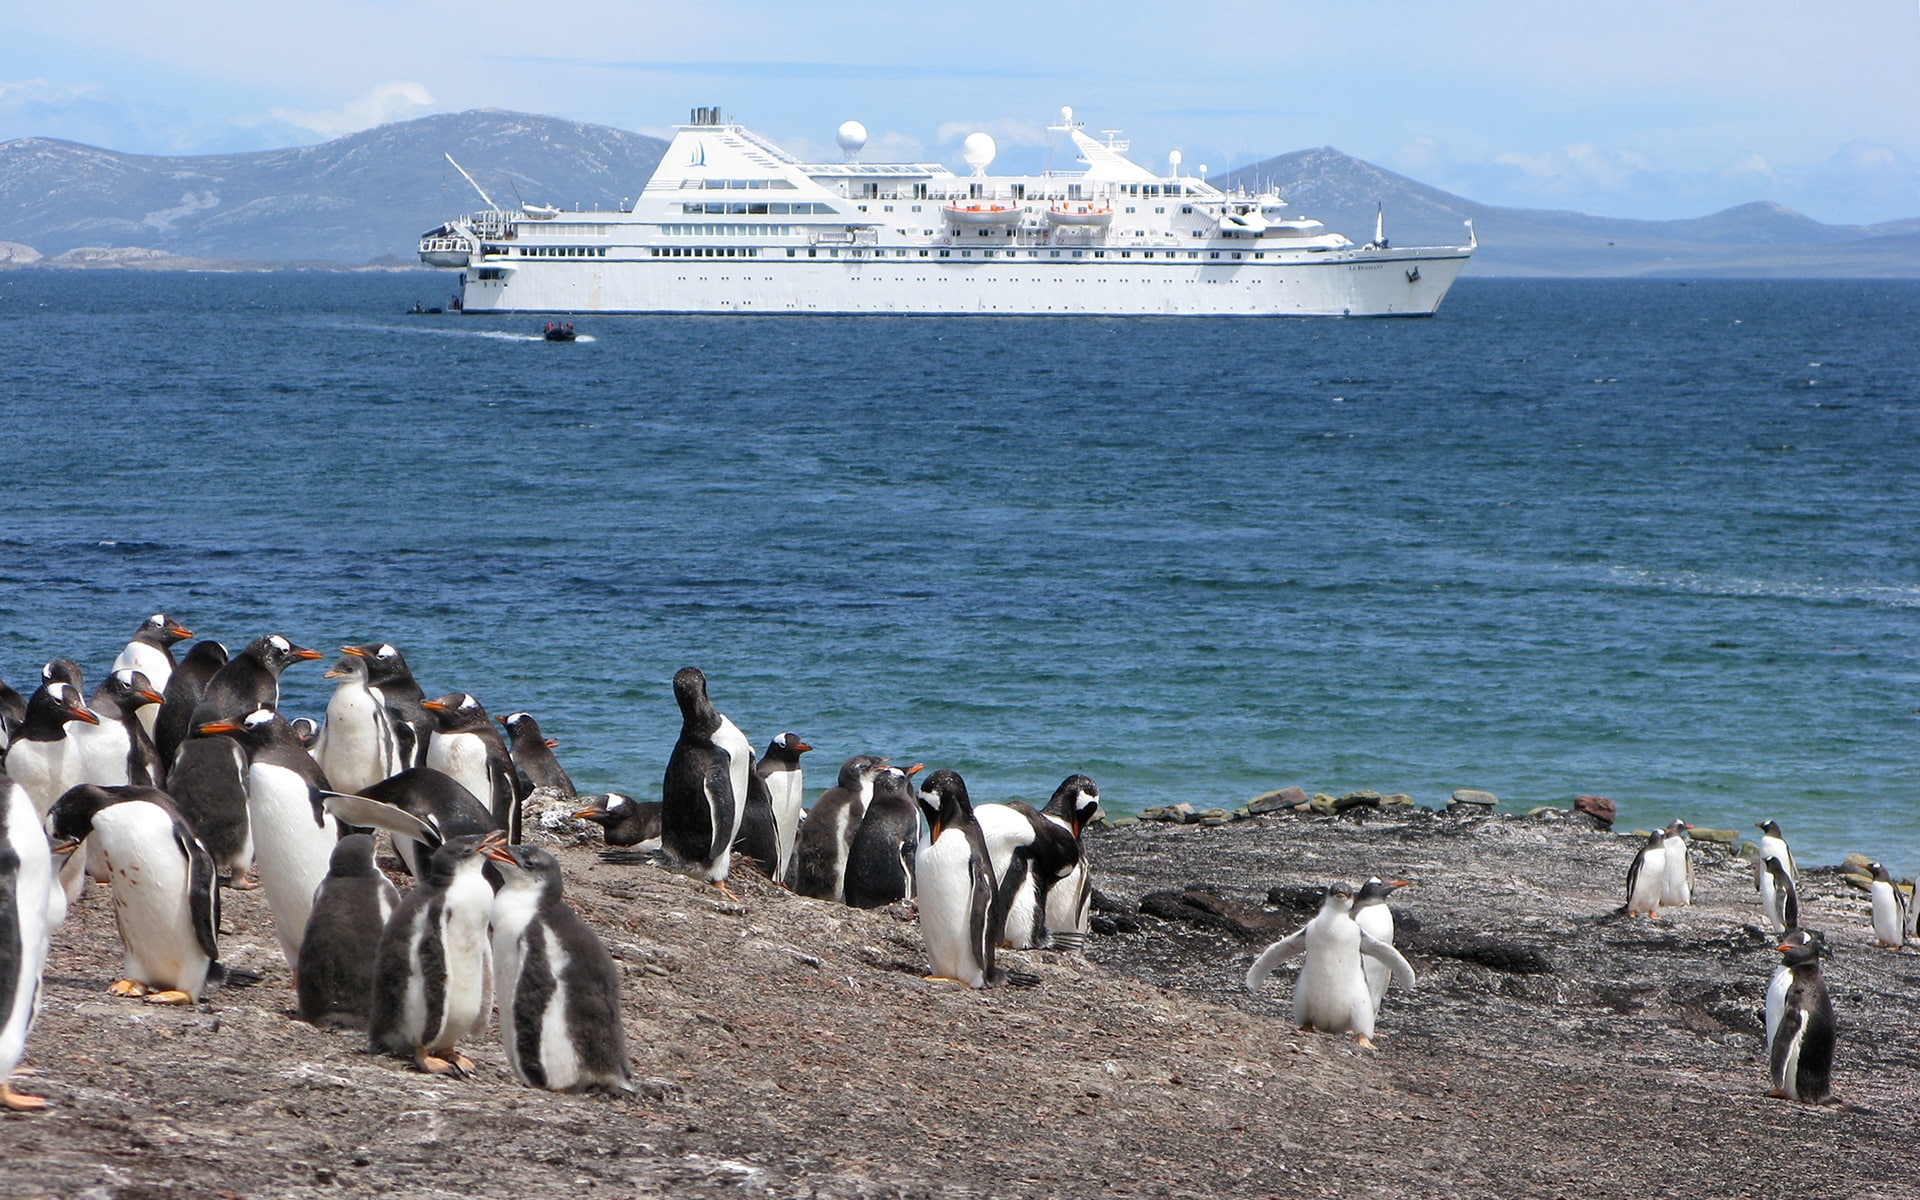 Penguin, coast, sea, ship, flock of penguins